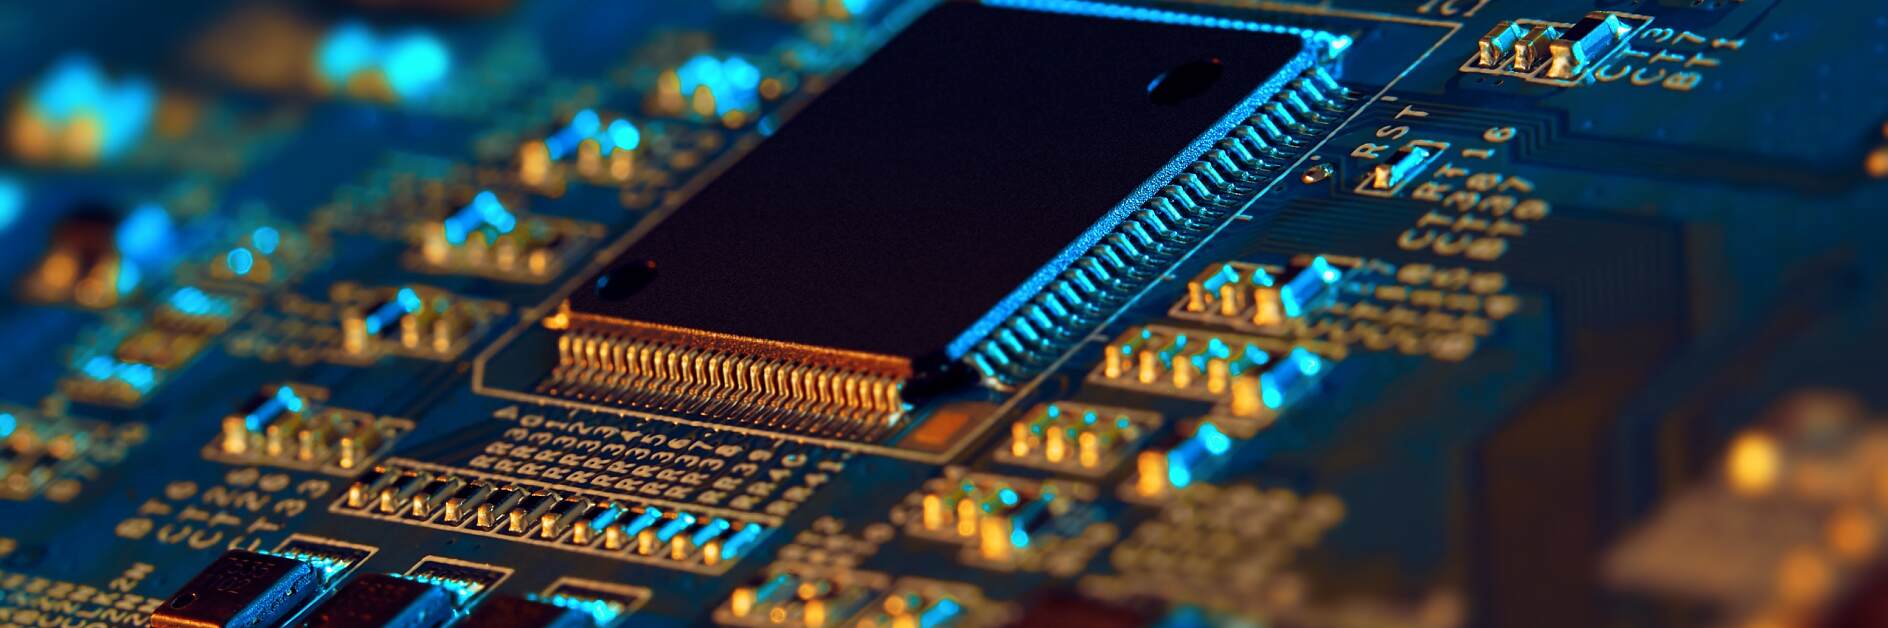 tesa_electronics_computer-chip-on-circuit-board (3)